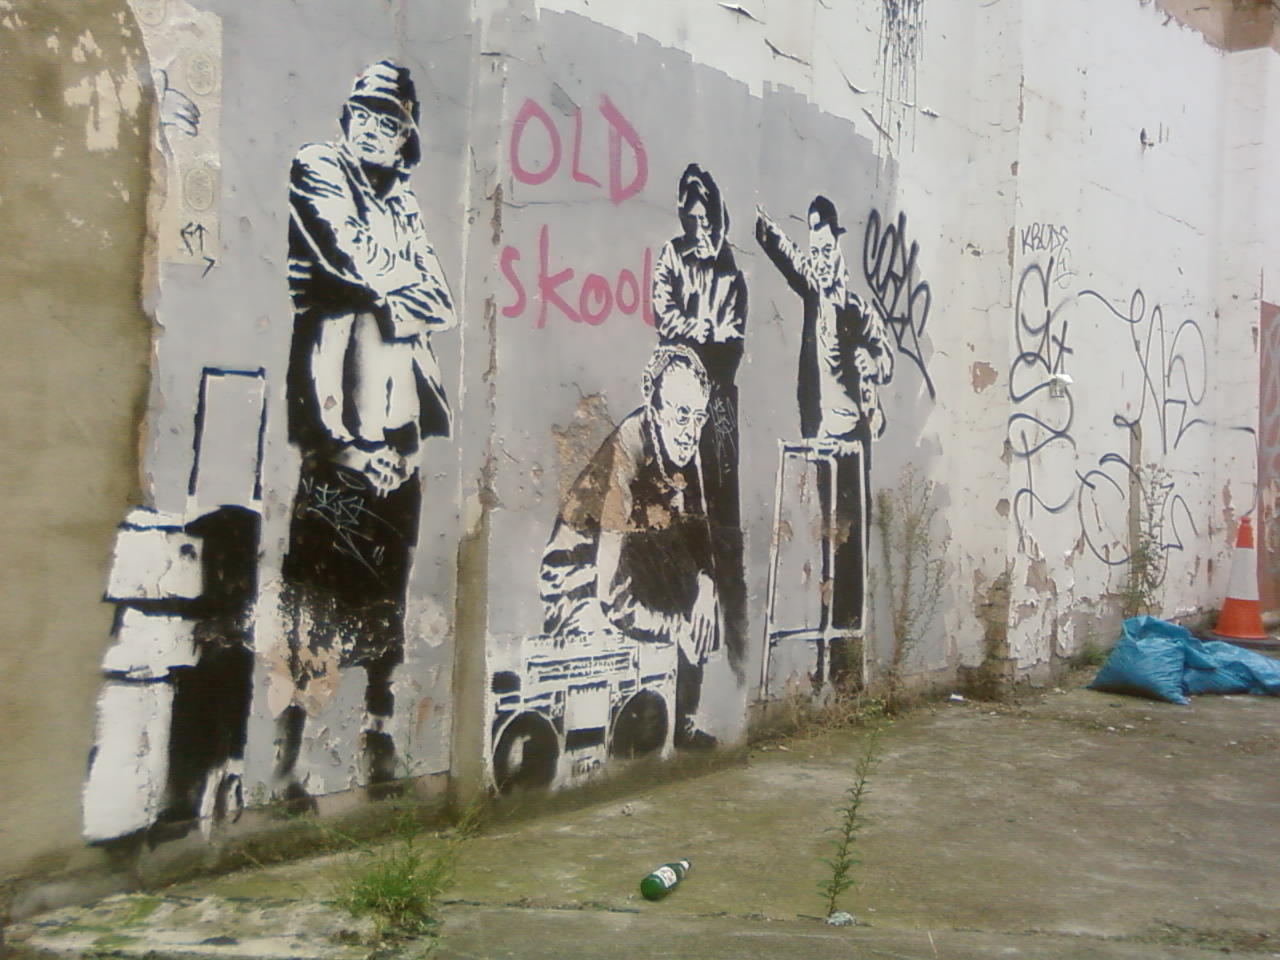 graffiti on an old wall of a street